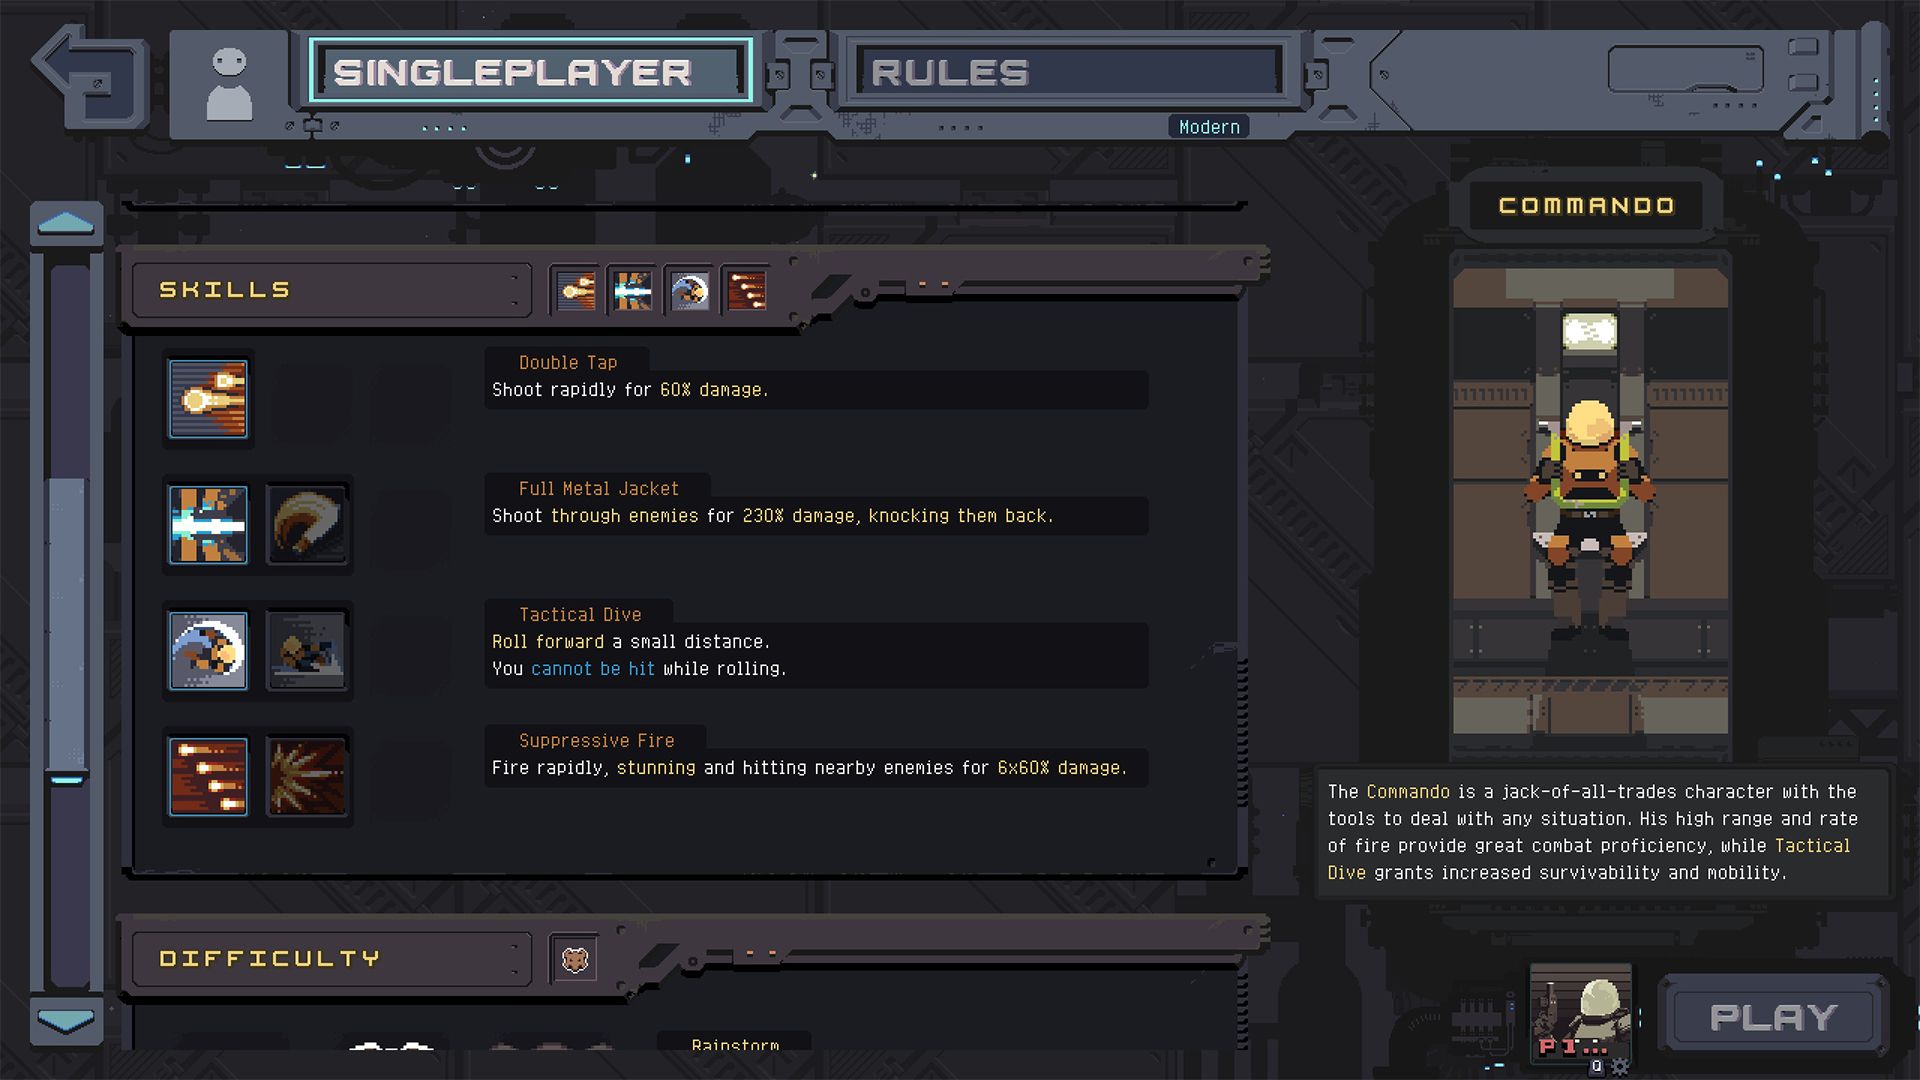 commando skill descriptions on character select screen